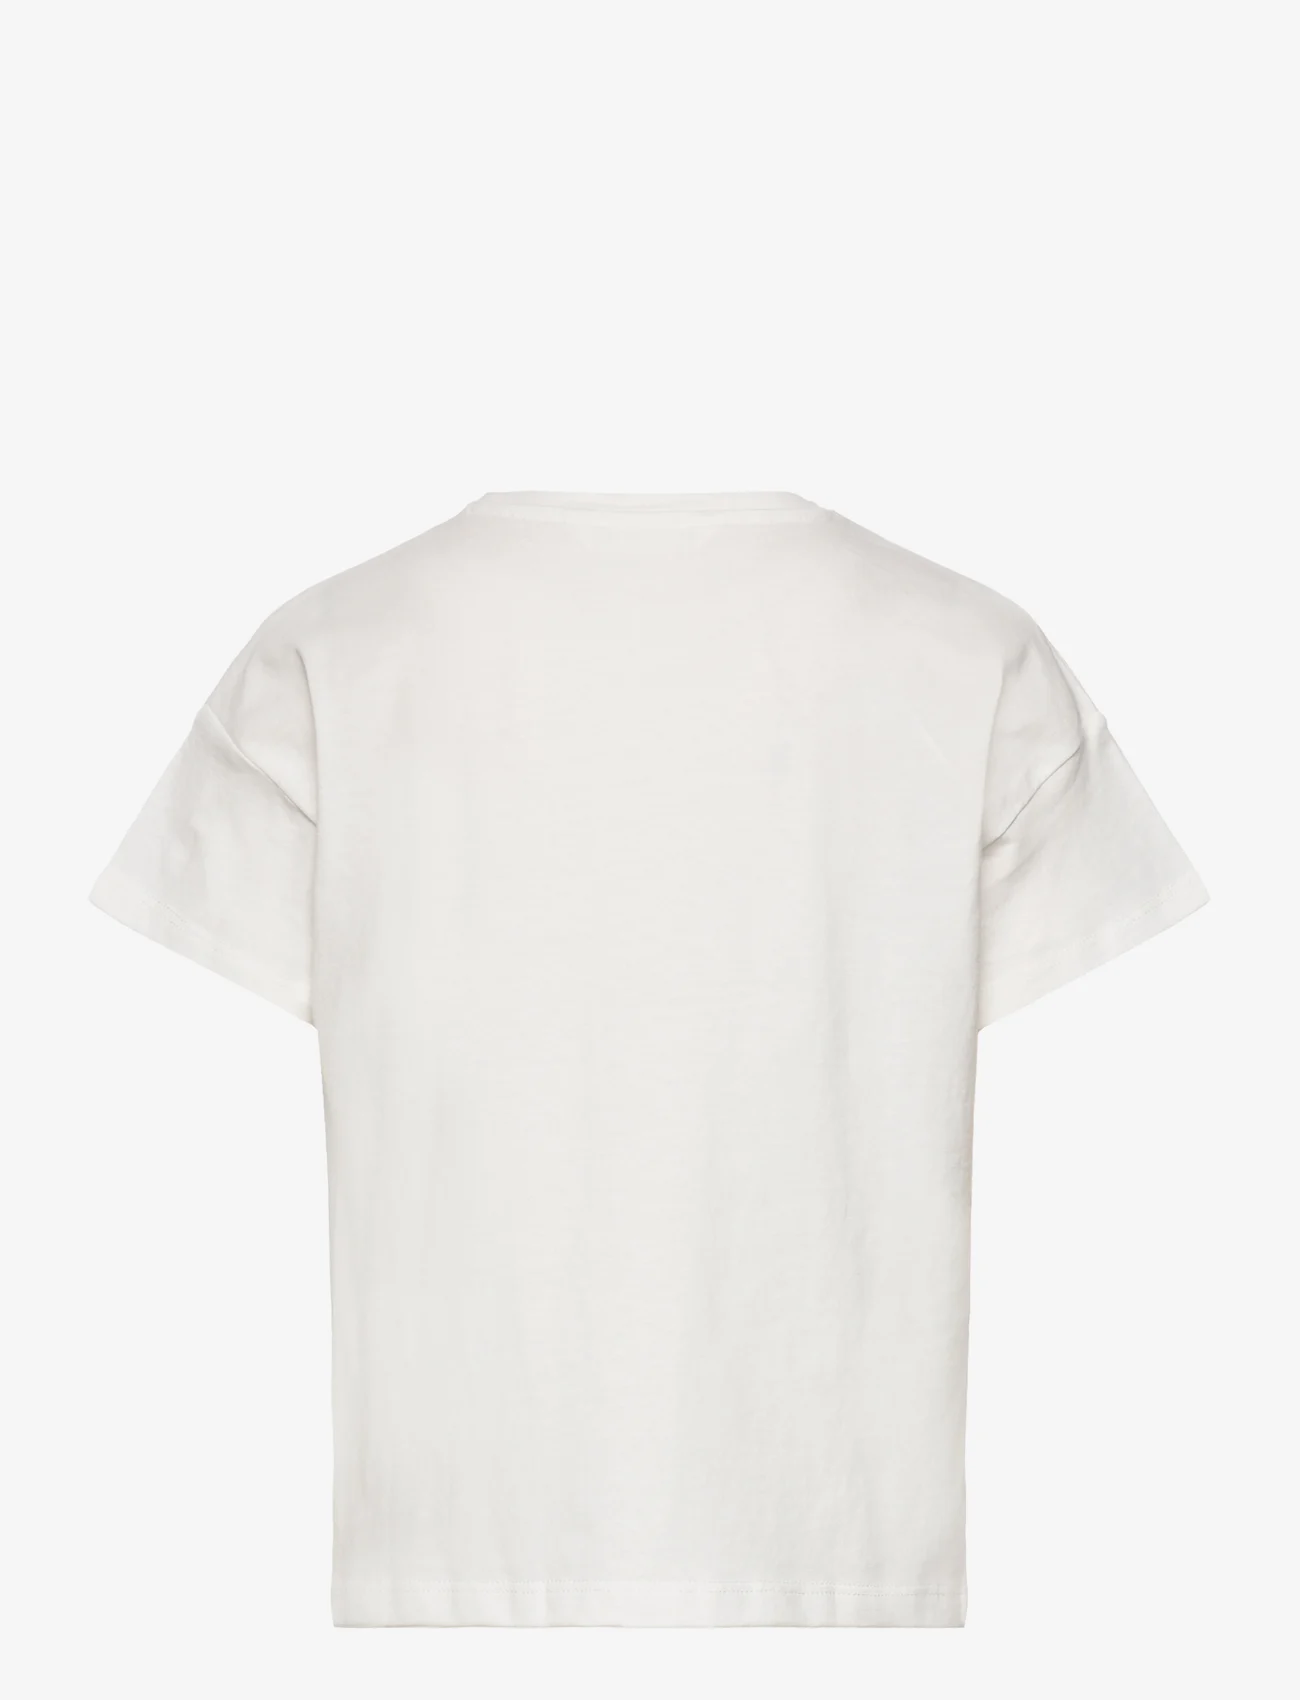 Mango - Printed cotton-blend T-shirt - natural white - 1